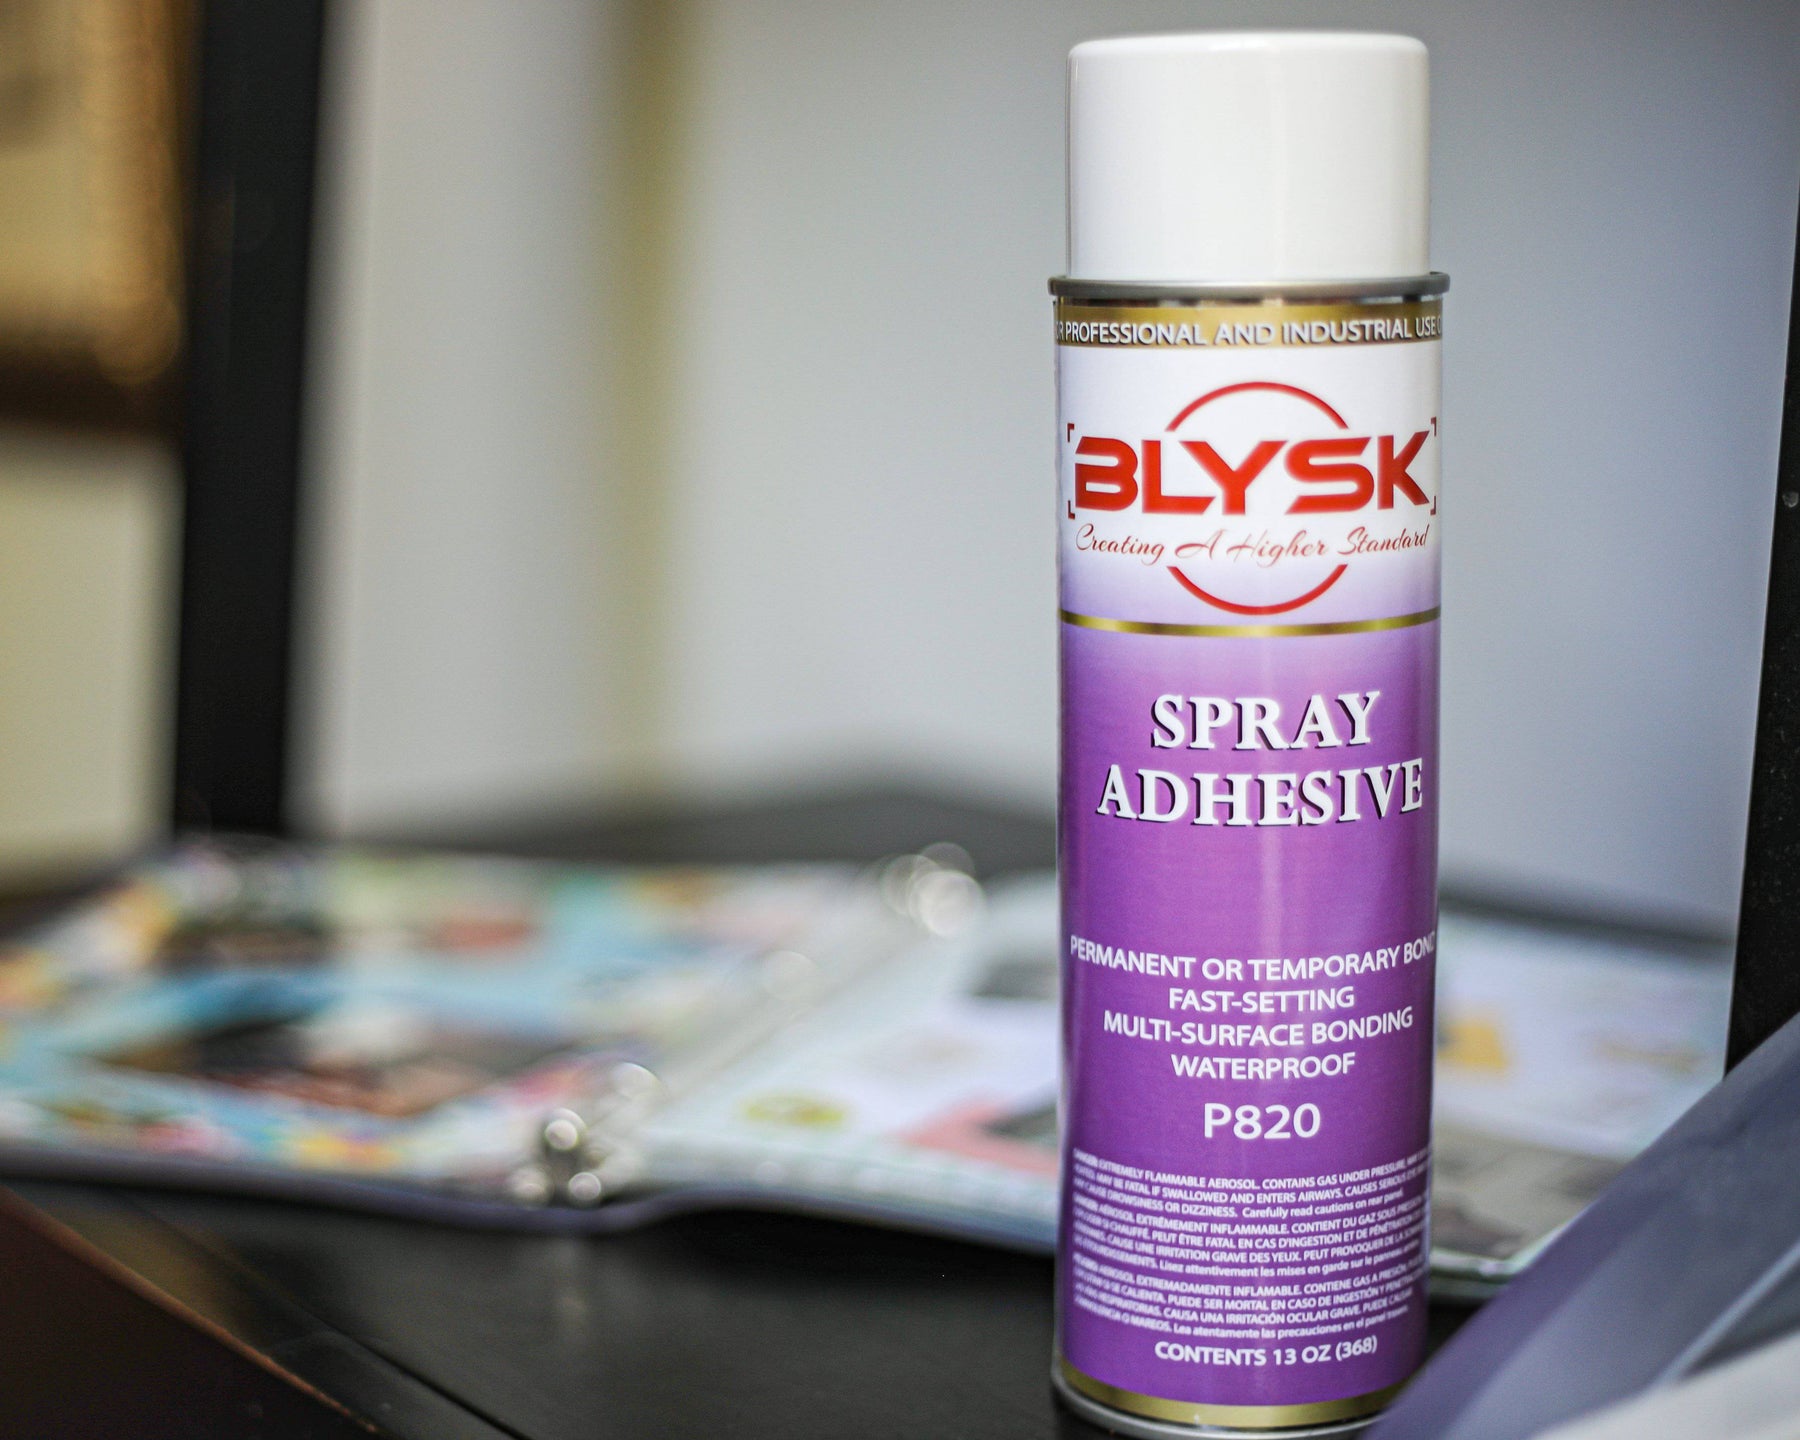 BLYSK Spray Adhesive 13oz - Permanent or Temporary Bonding, Waterproof - Maazzo